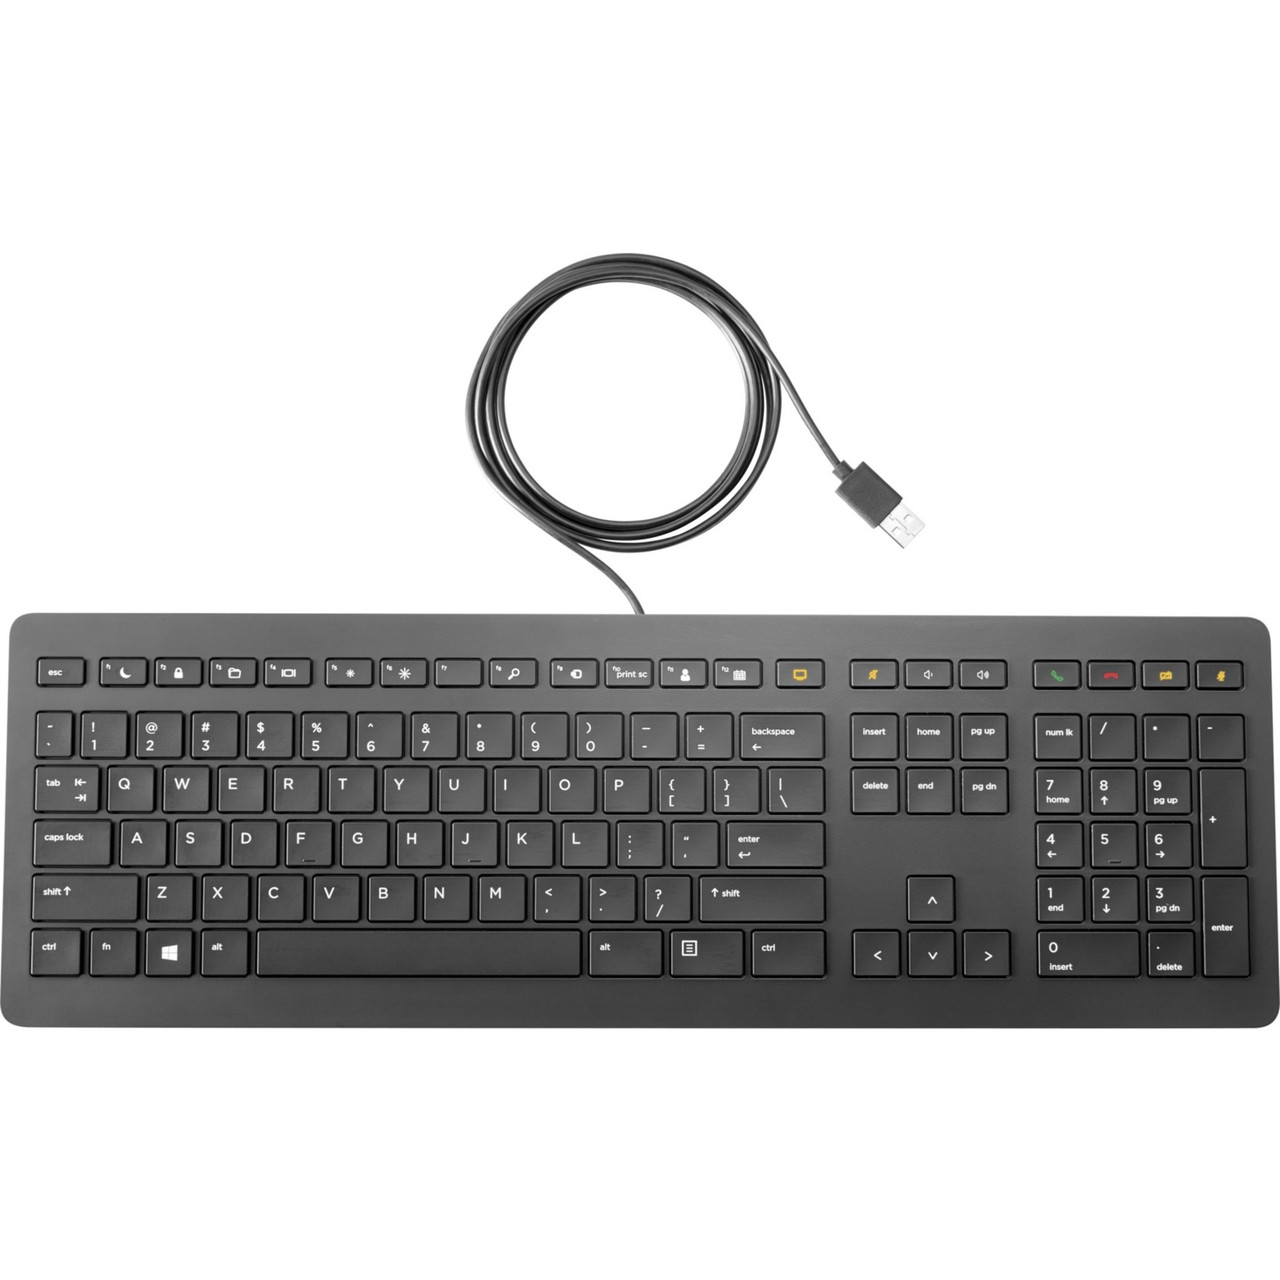 HP USB Collaboration Keyboard - Z9N38UT#ABA